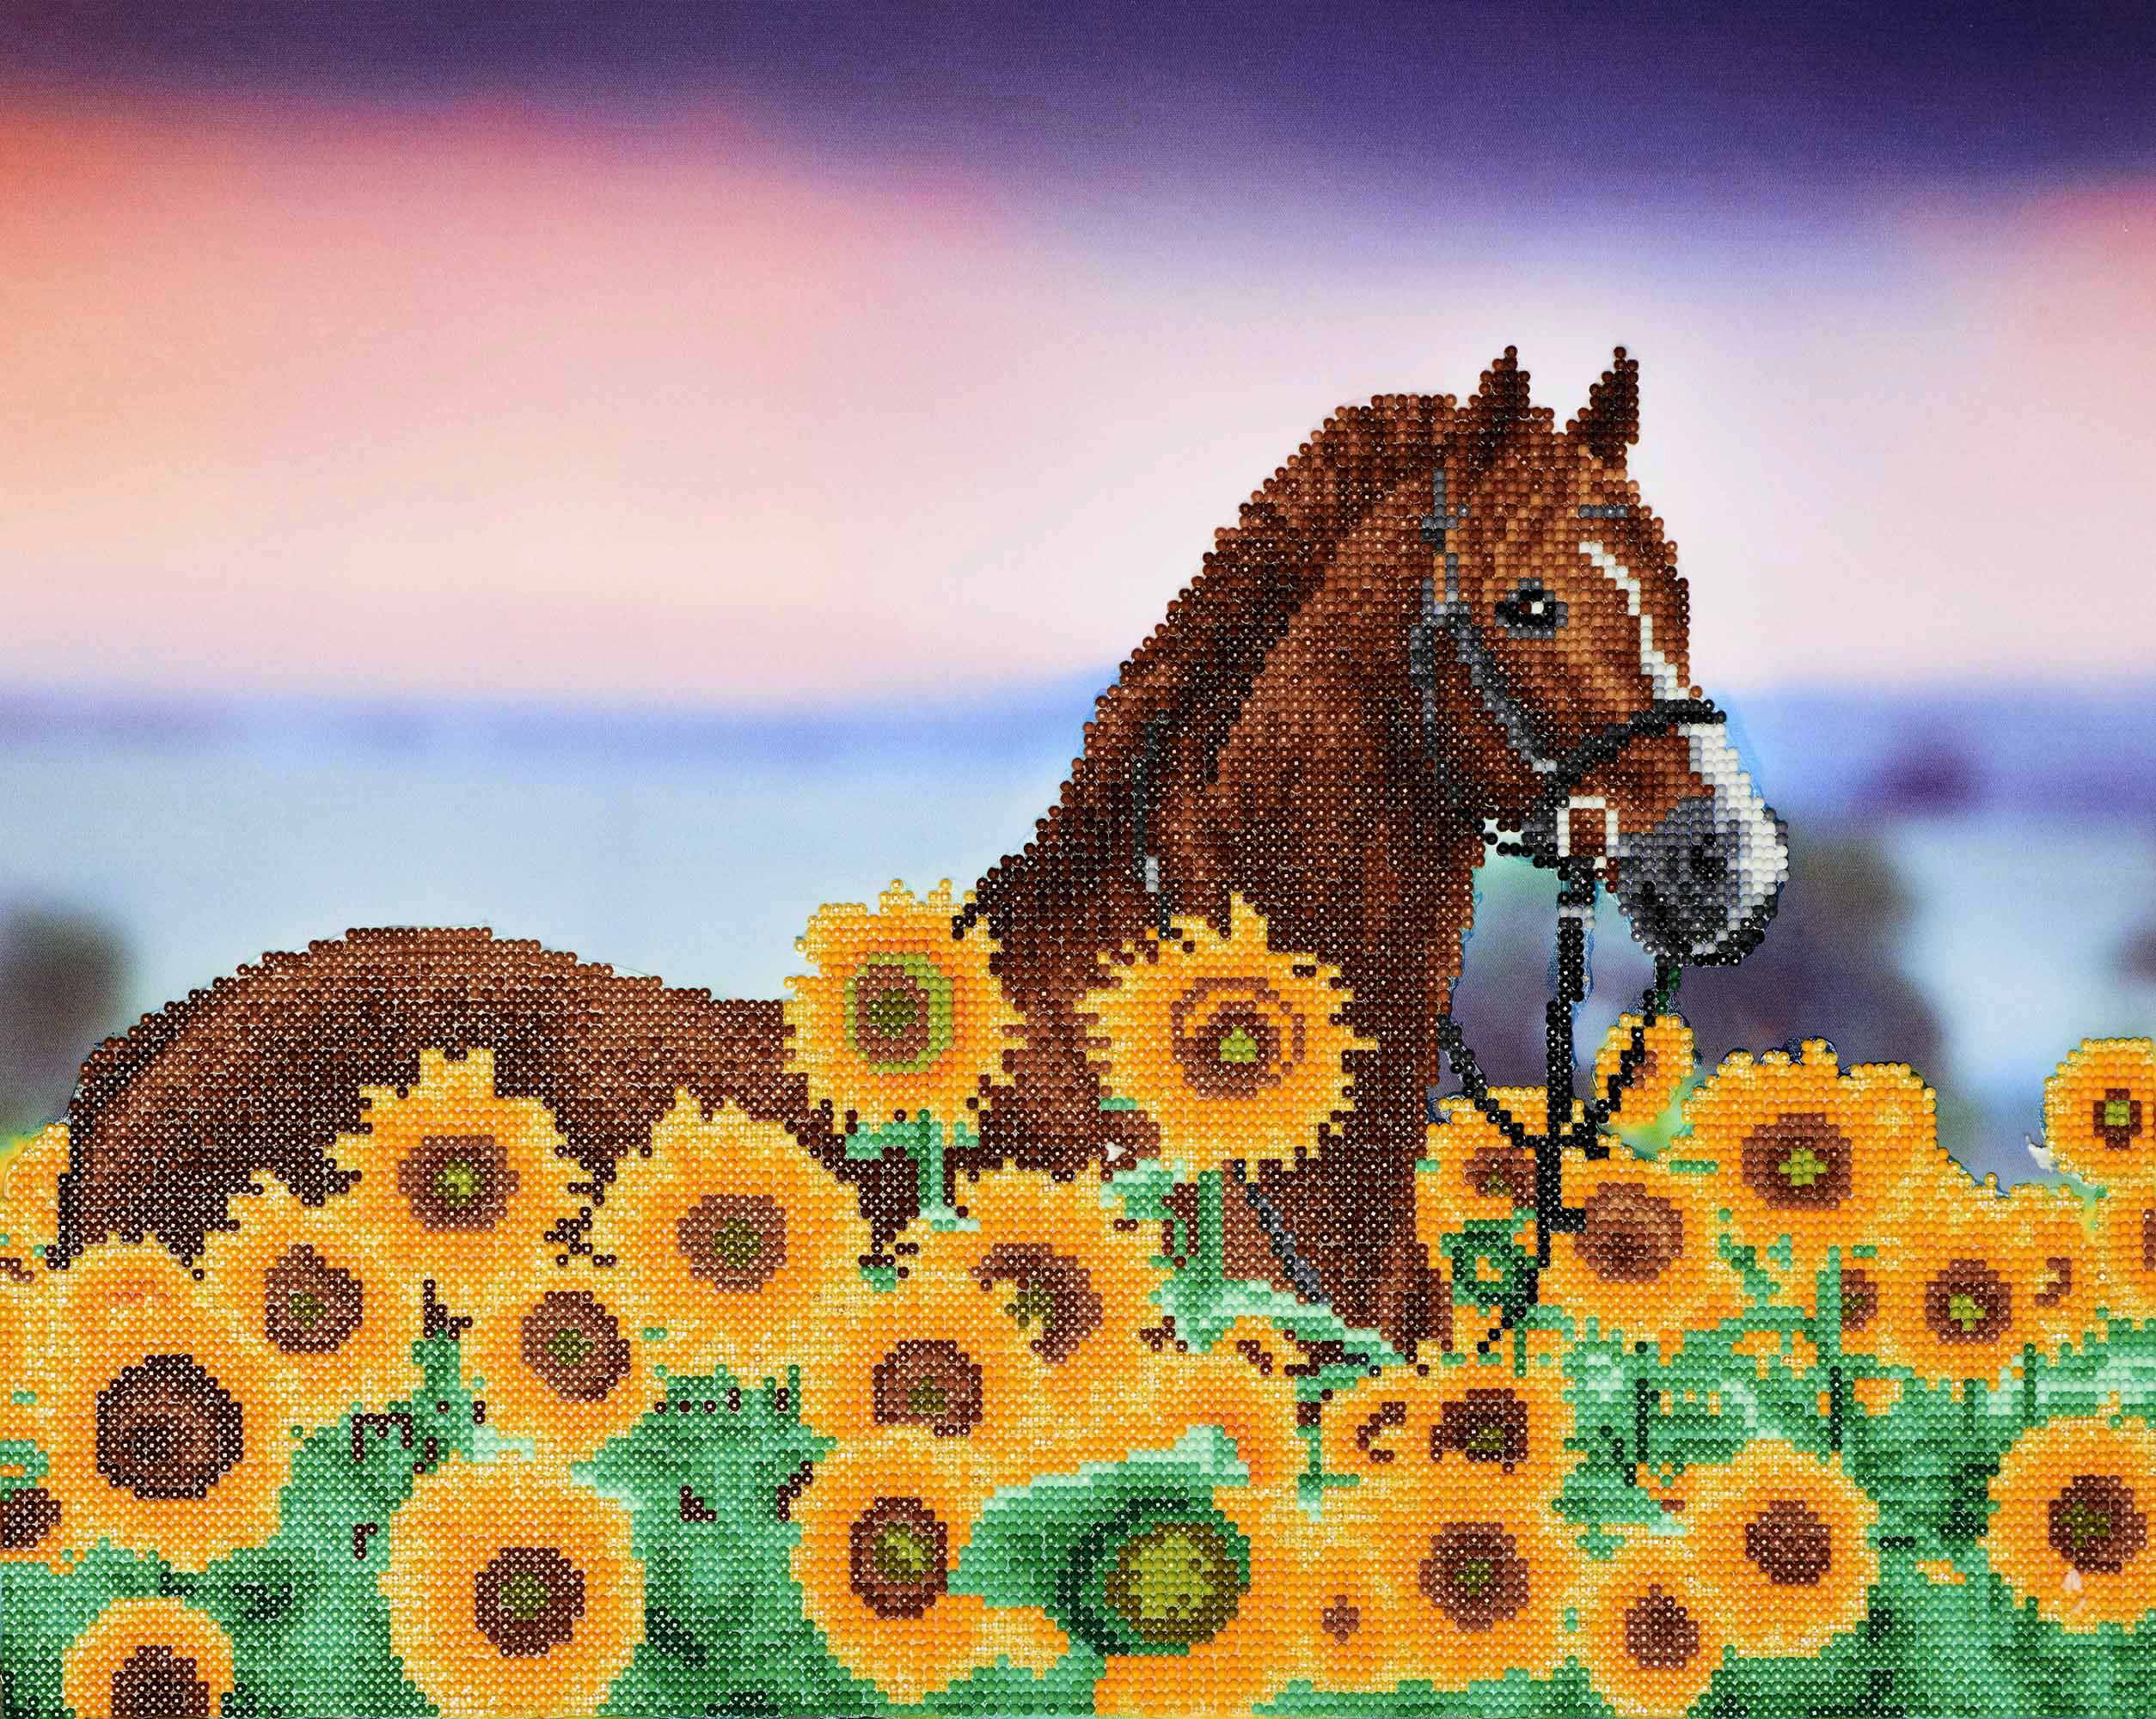 Horse abstract animal, diamond painting diy kit ds886